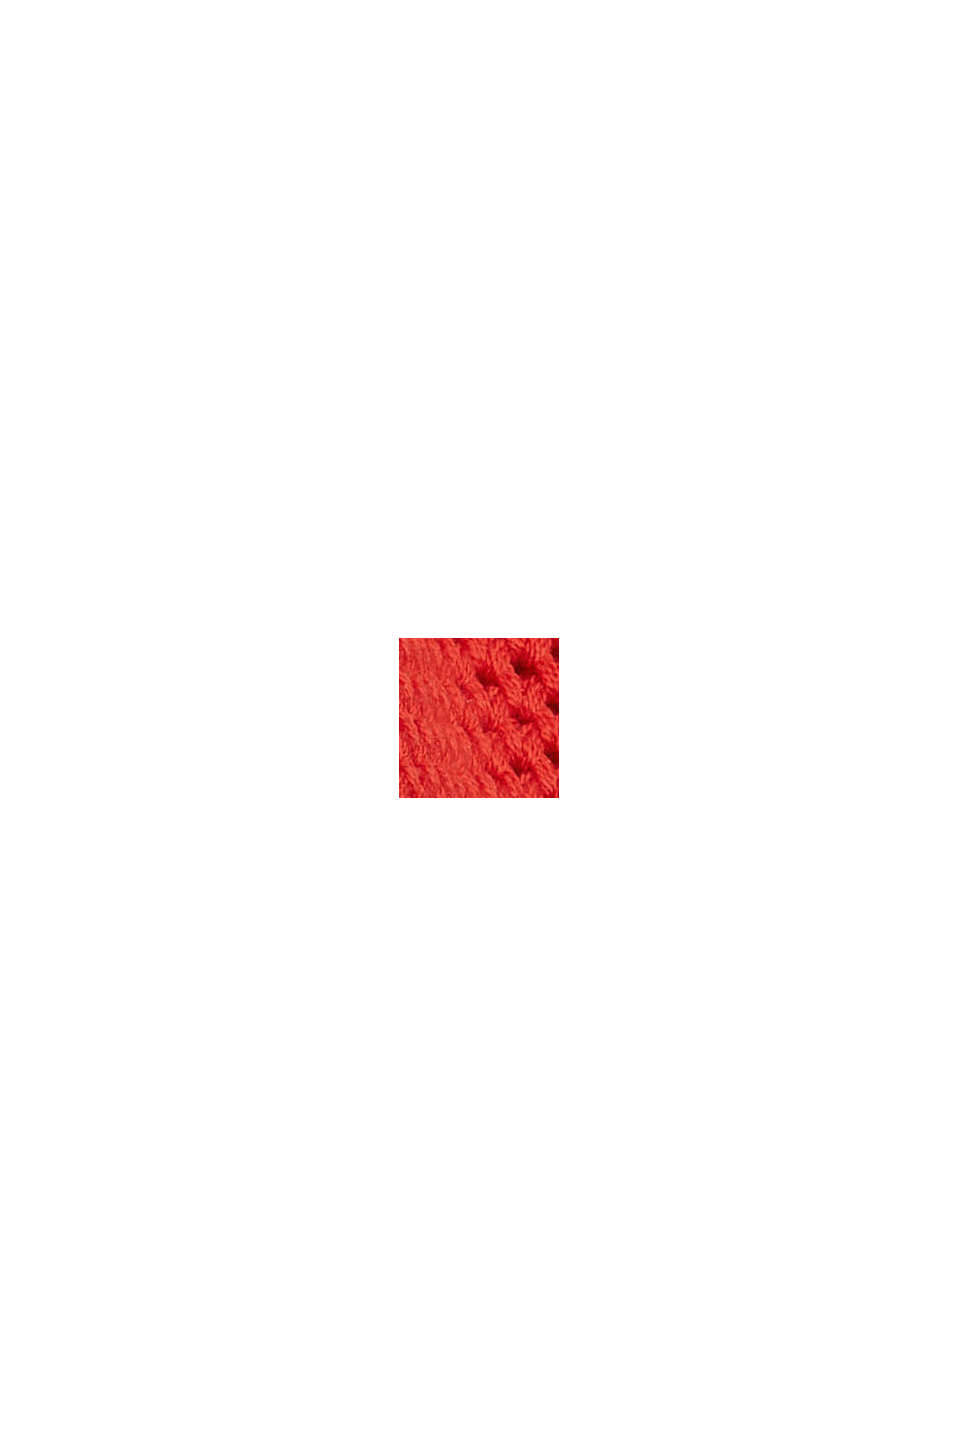 Textured knit jumper, blended cotton, ORANGE RED, swatch